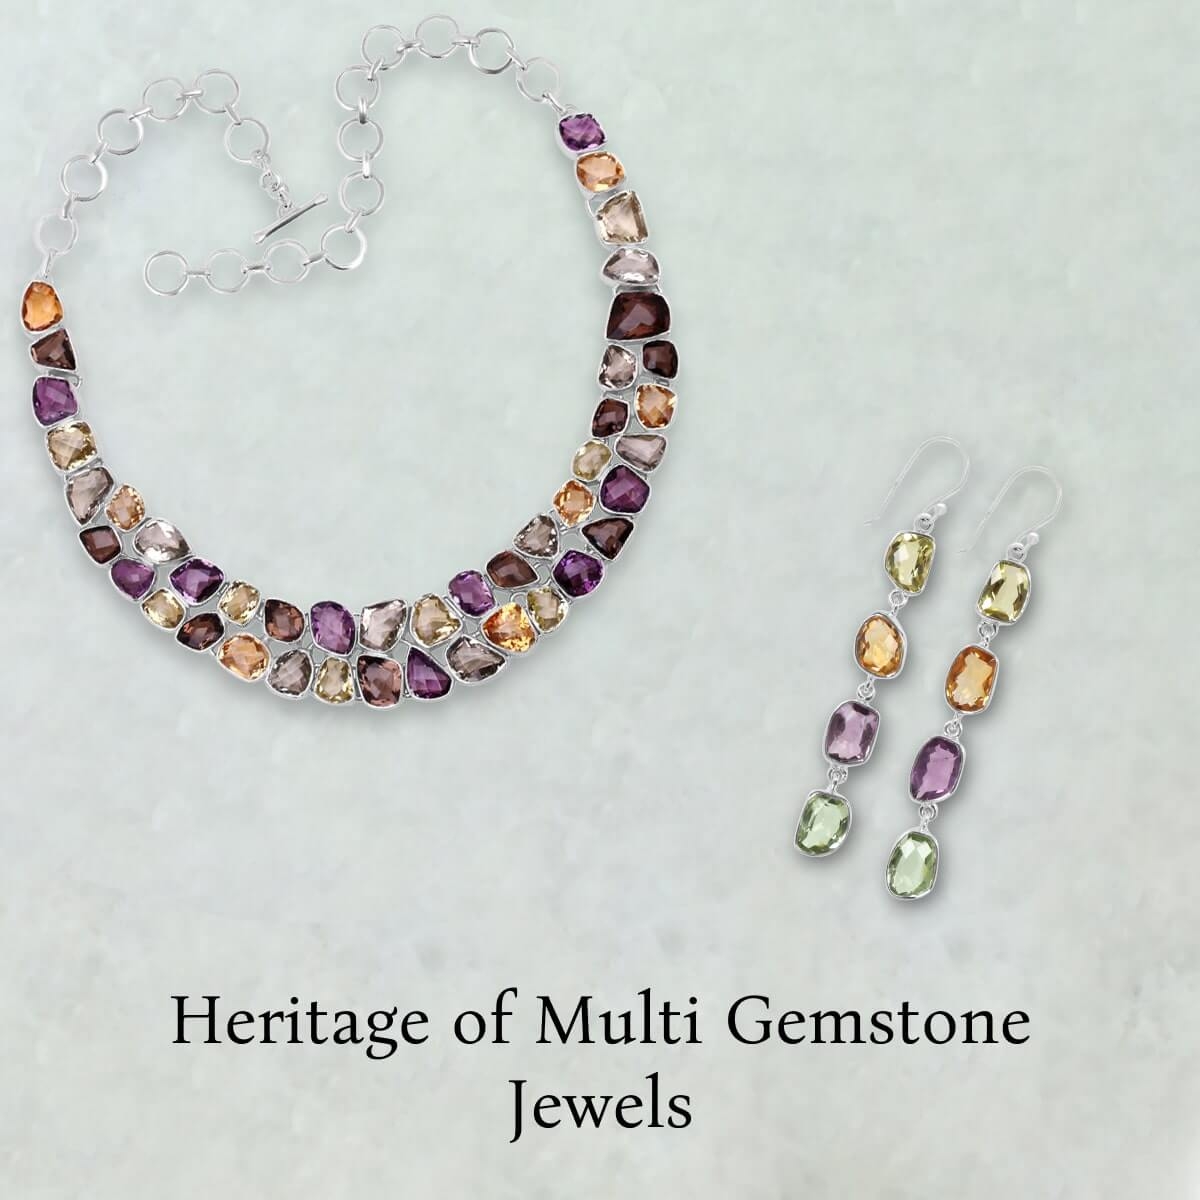 Multi Gemstone Jewelry History